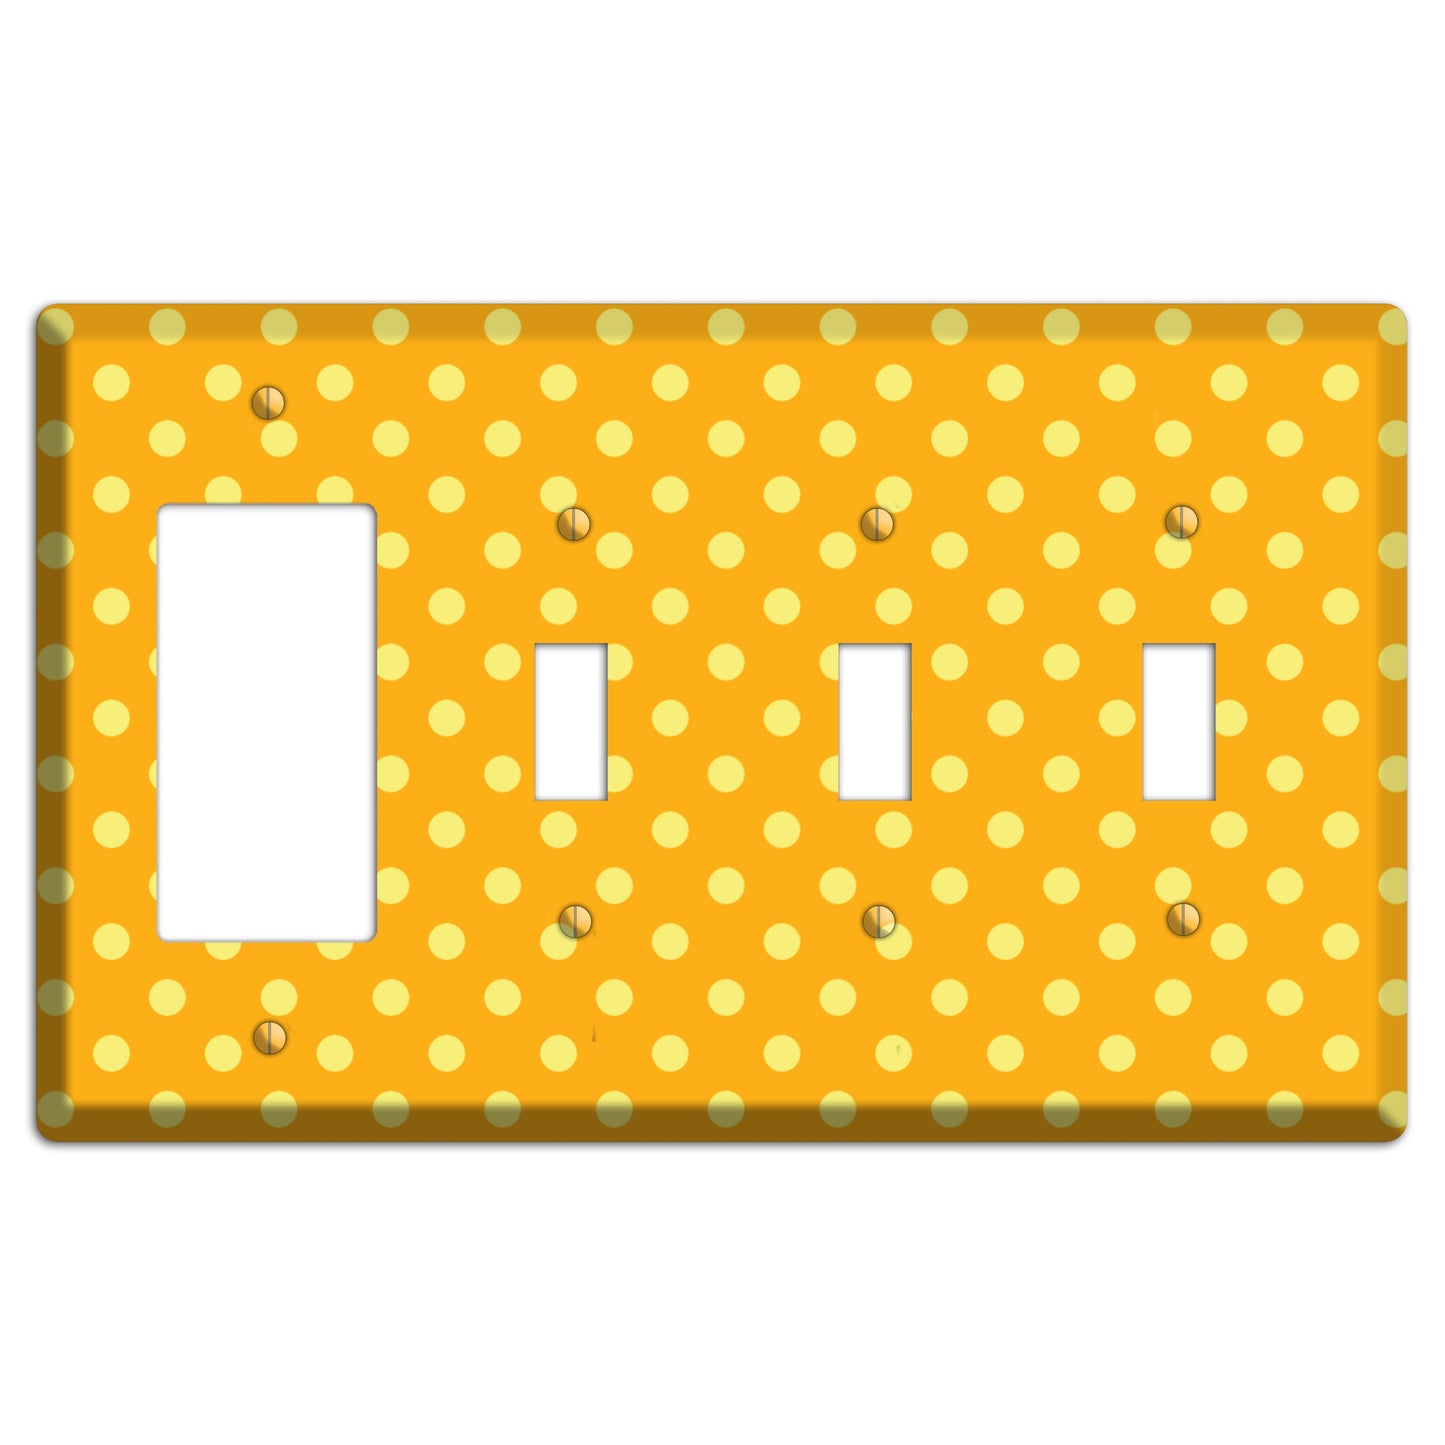 Orange and Yellow Polka Dot Rocker / 3 Toggle Wallplate